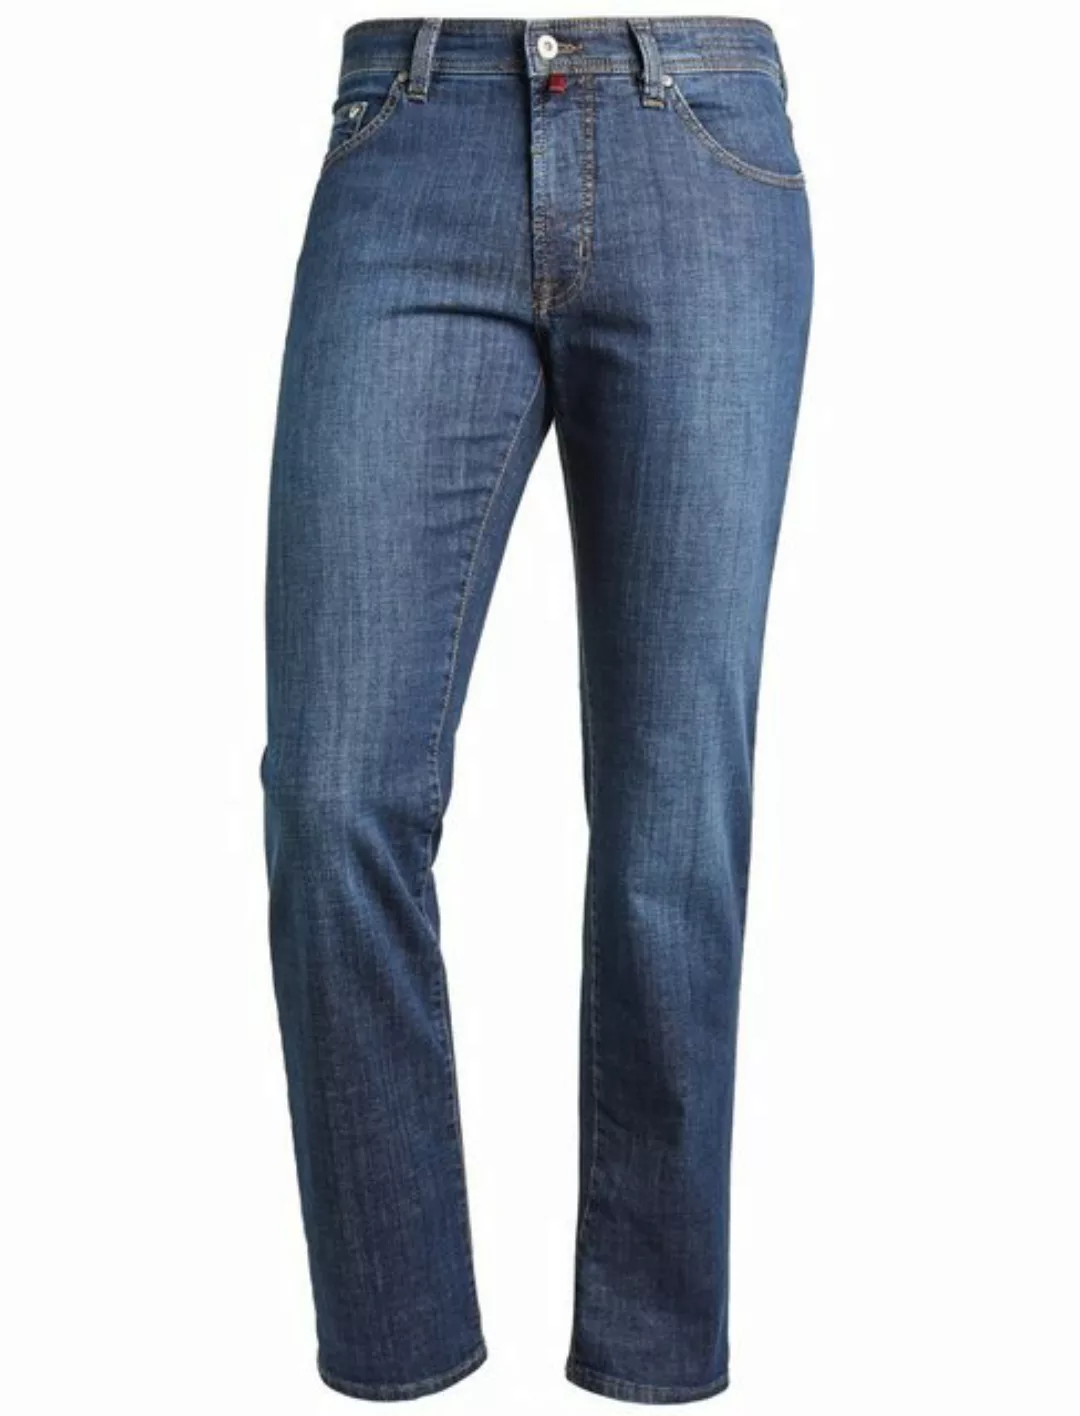 Pierre Cardin 5-Pocket-Jeans PIERRE CARDIN DEAUVILLE authentic mid blue use günstig online kaufen